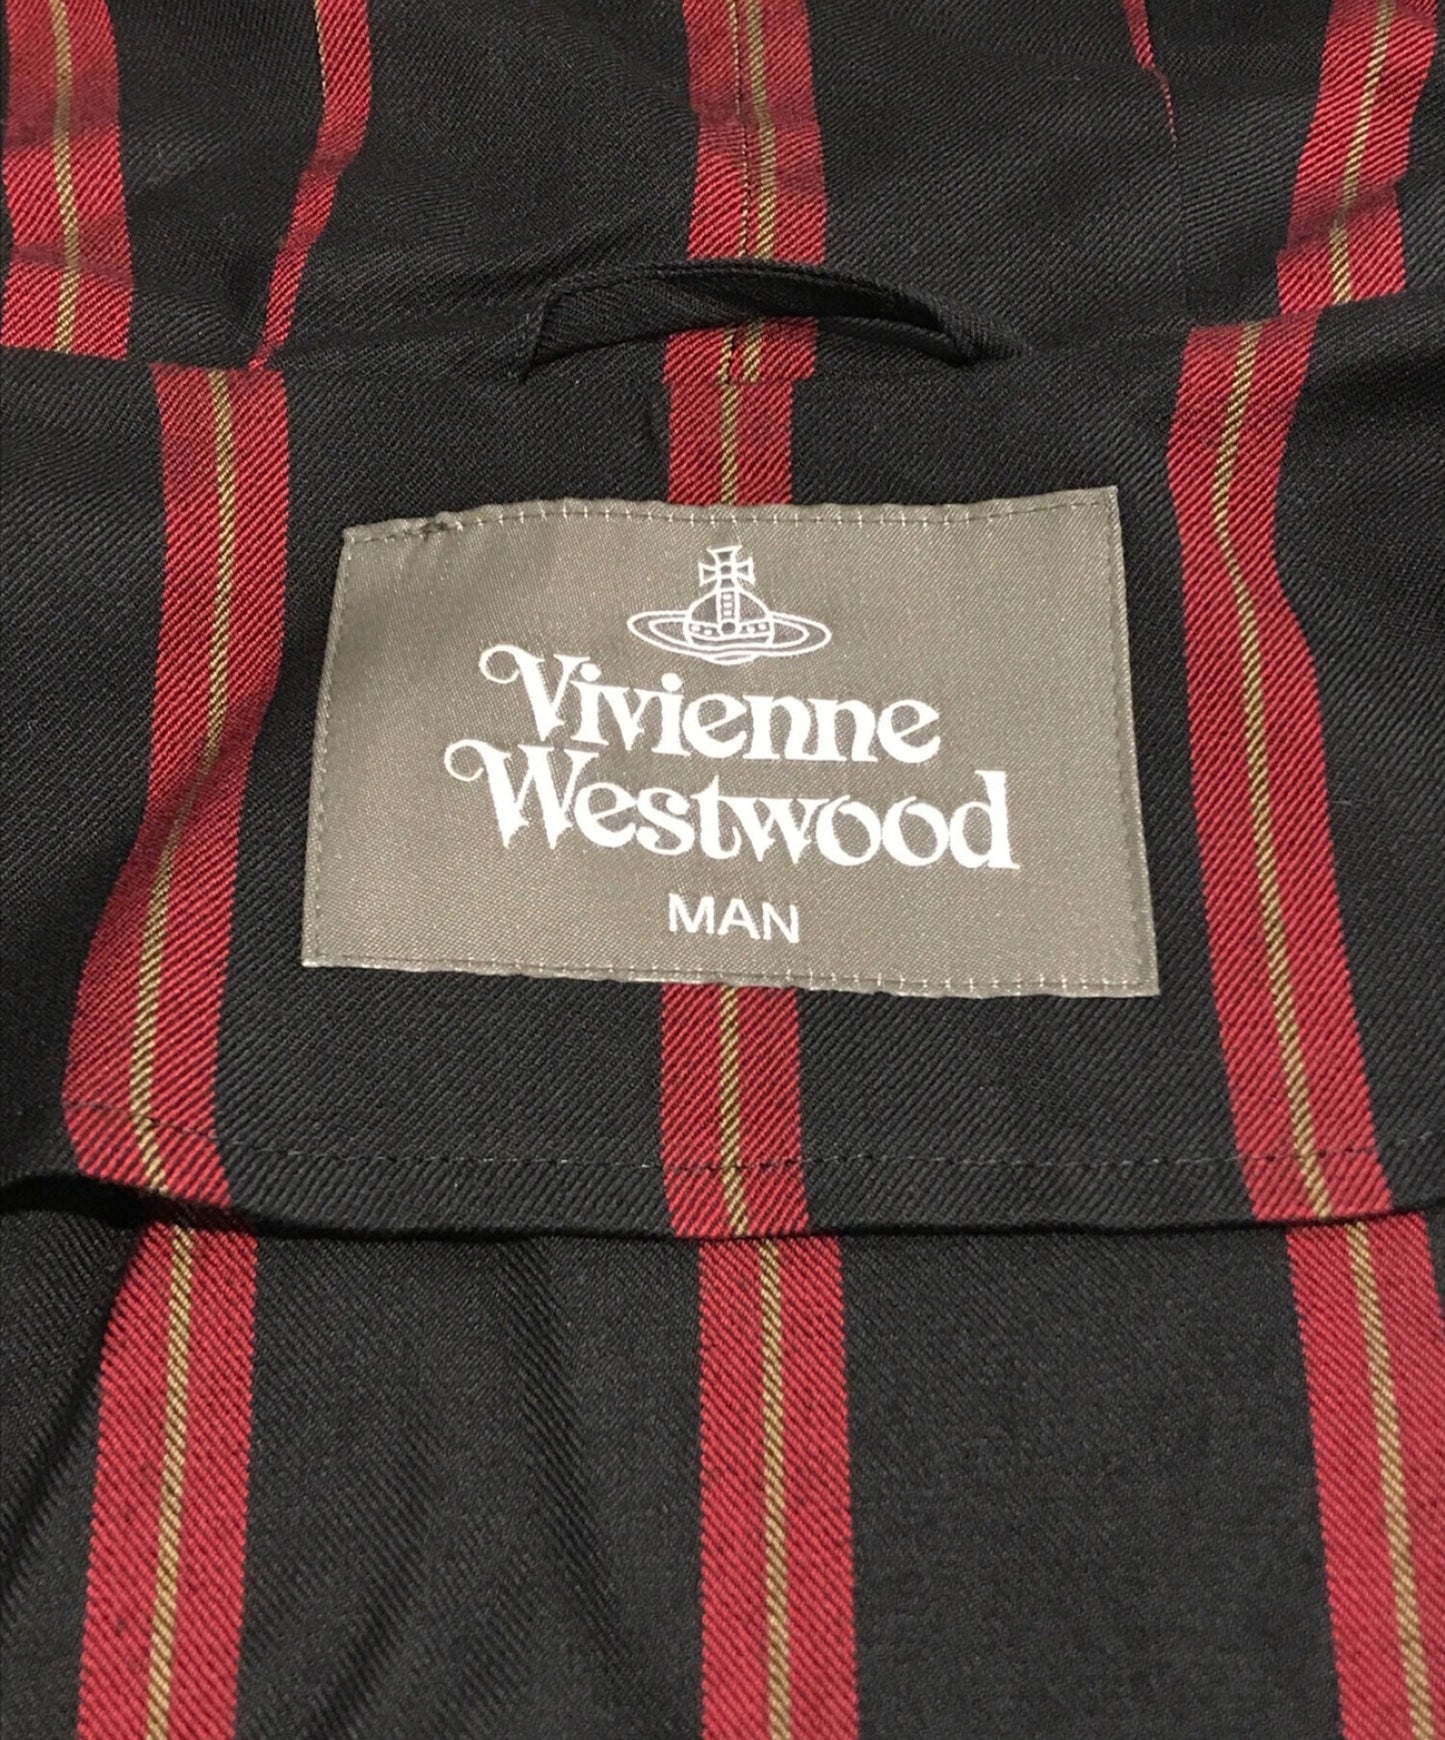 Vivienne Westwood Man เสื้อสปอร์ต 504498069